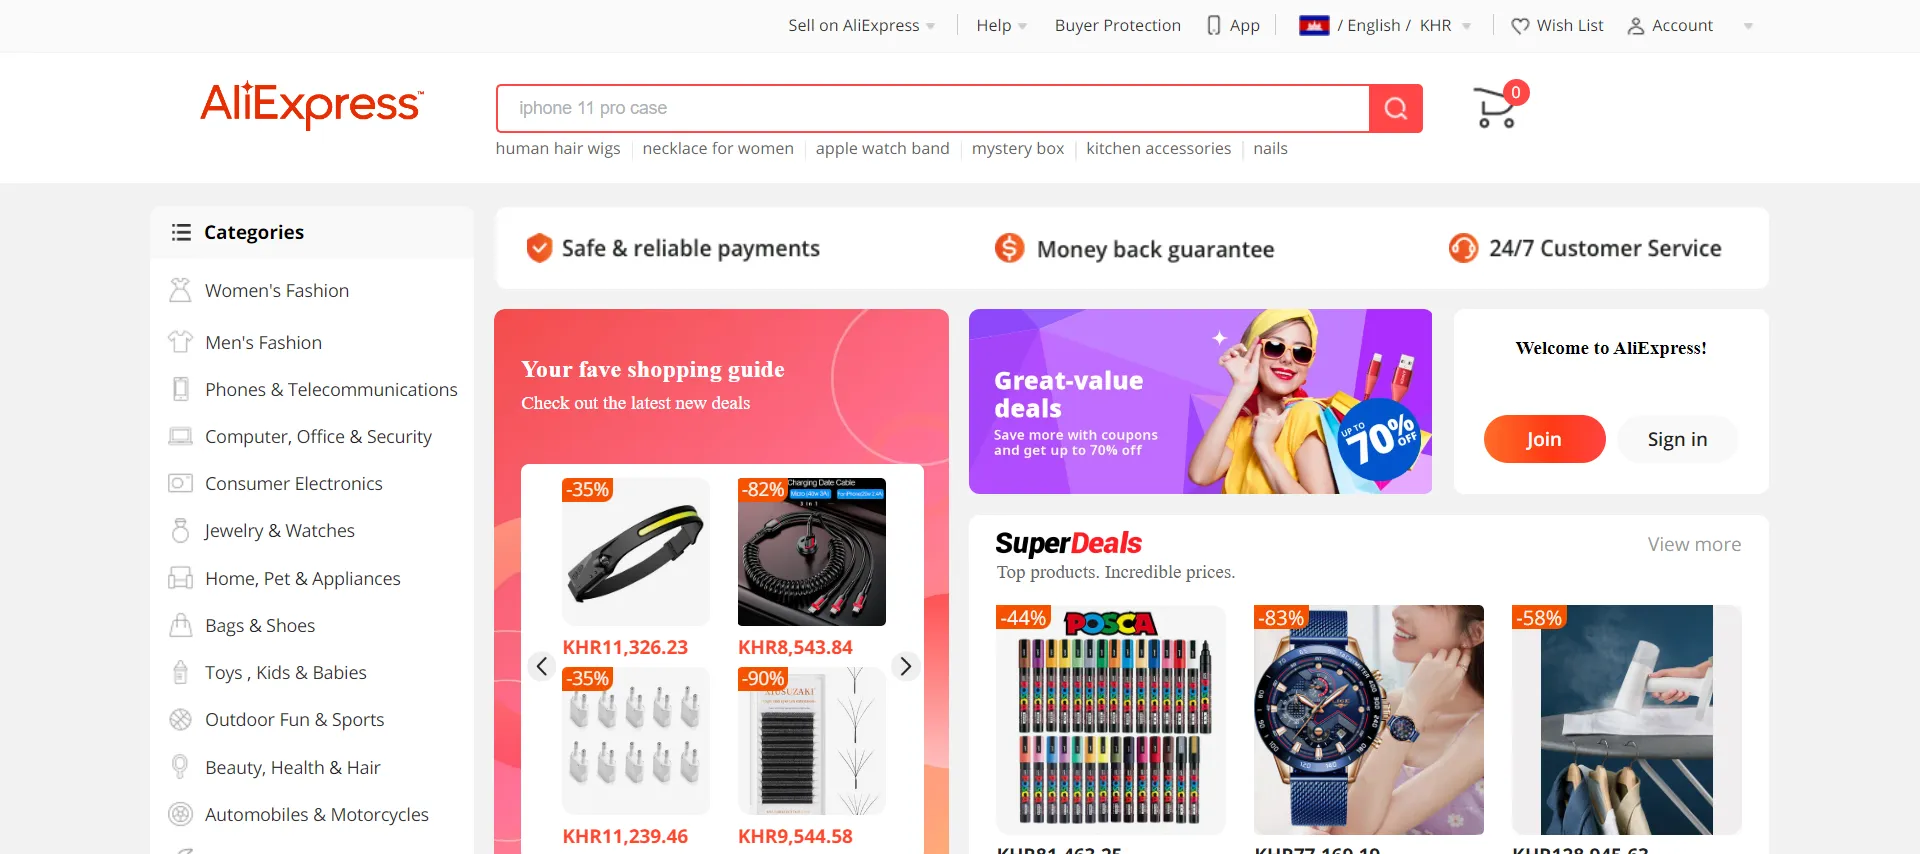 Alibaba Group's AliExpress online retail platform